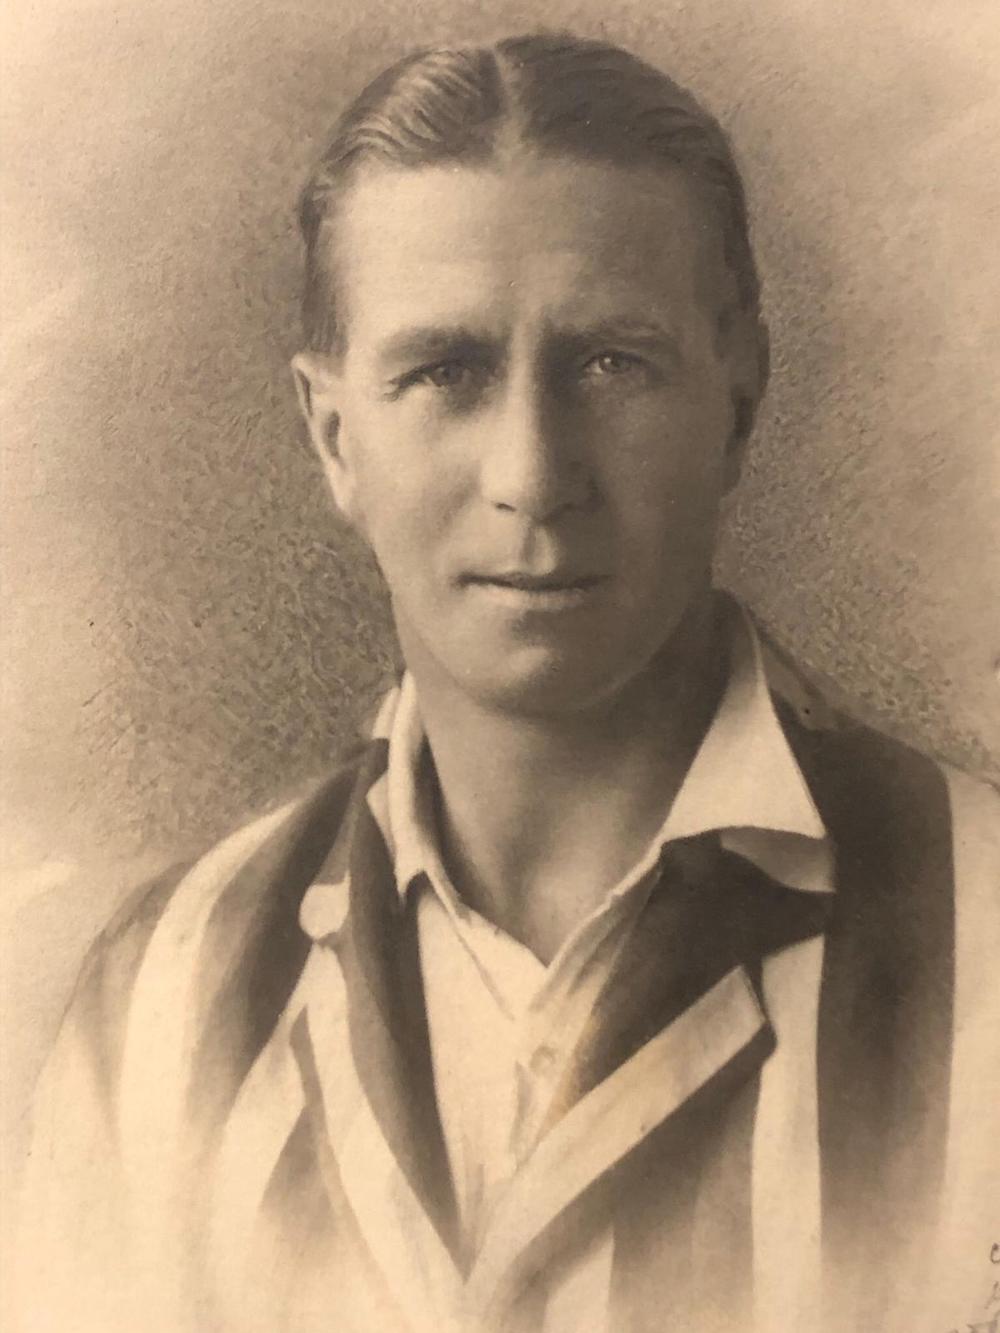 Cricket legend Johnny Douglas